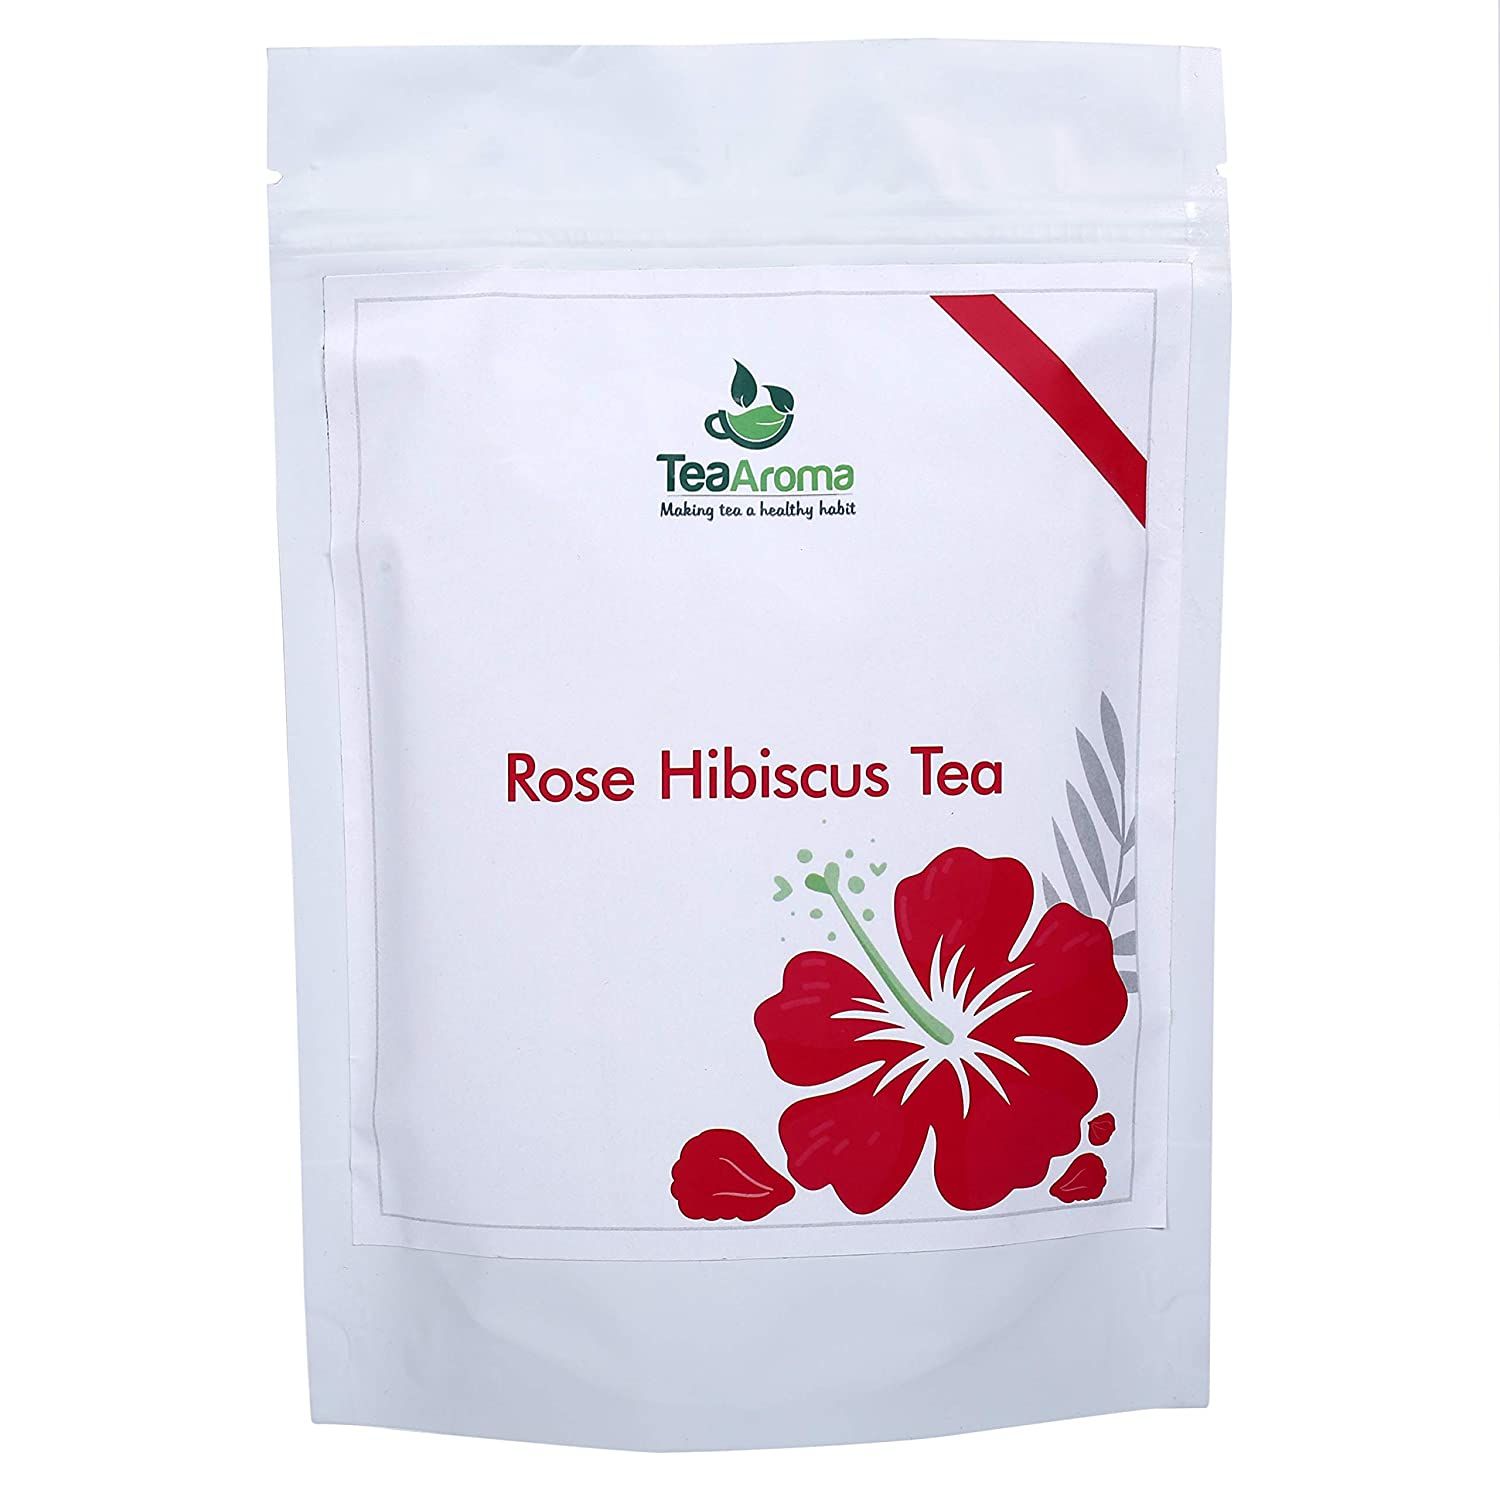 Tea Aroma Rose Hibiscus Tea Image